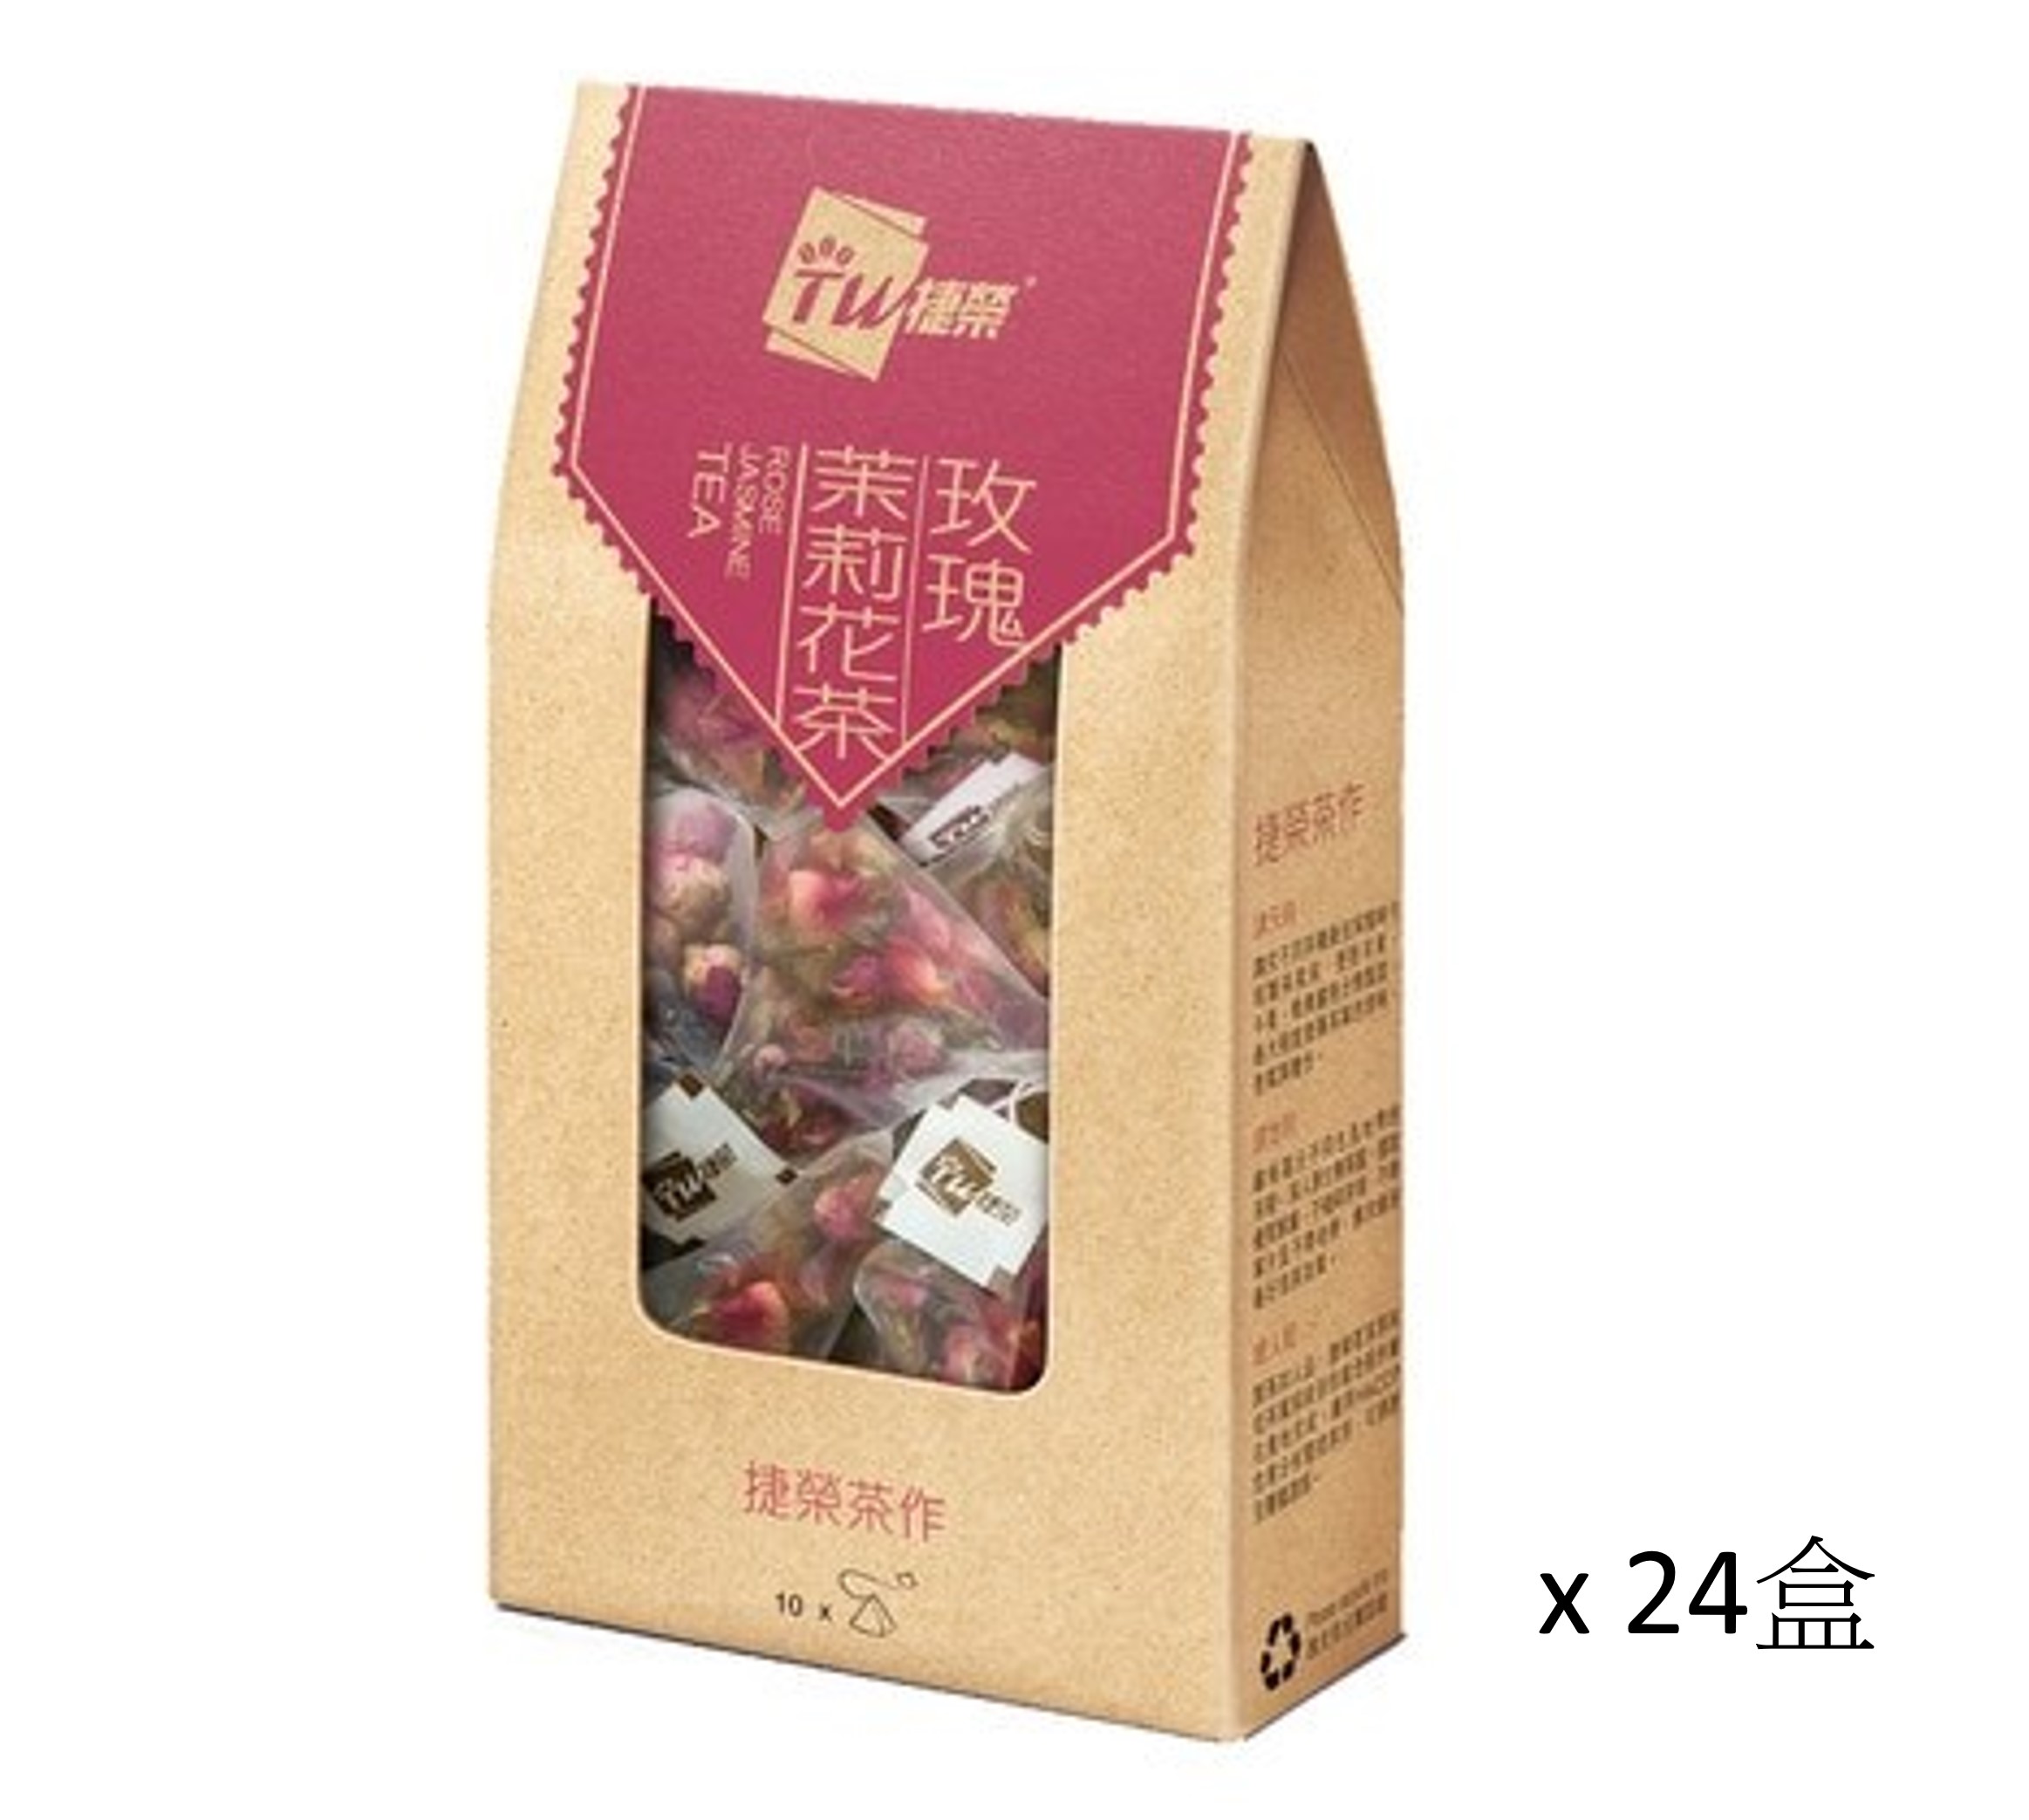 TW Rose Jasmine Tea Bag 2.5g x 10 sachets x (24 boxes)